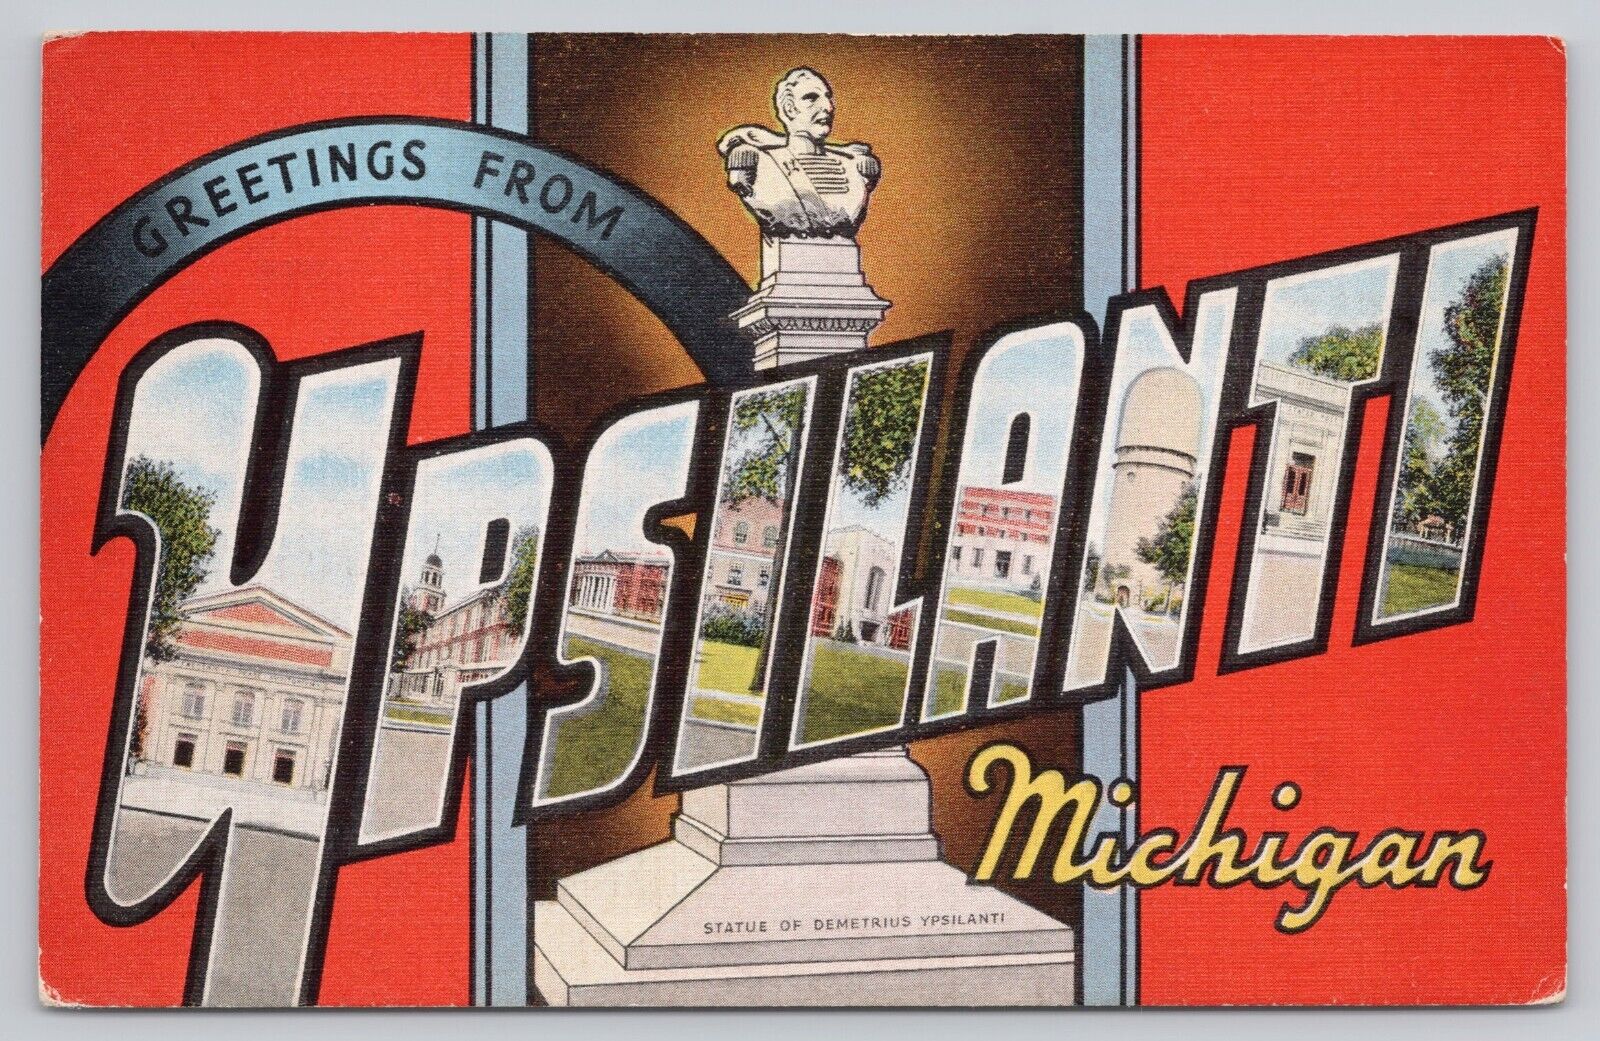 Ypsilanti Michigan, Large Letter Greetings, Statue, Vintage Postcard